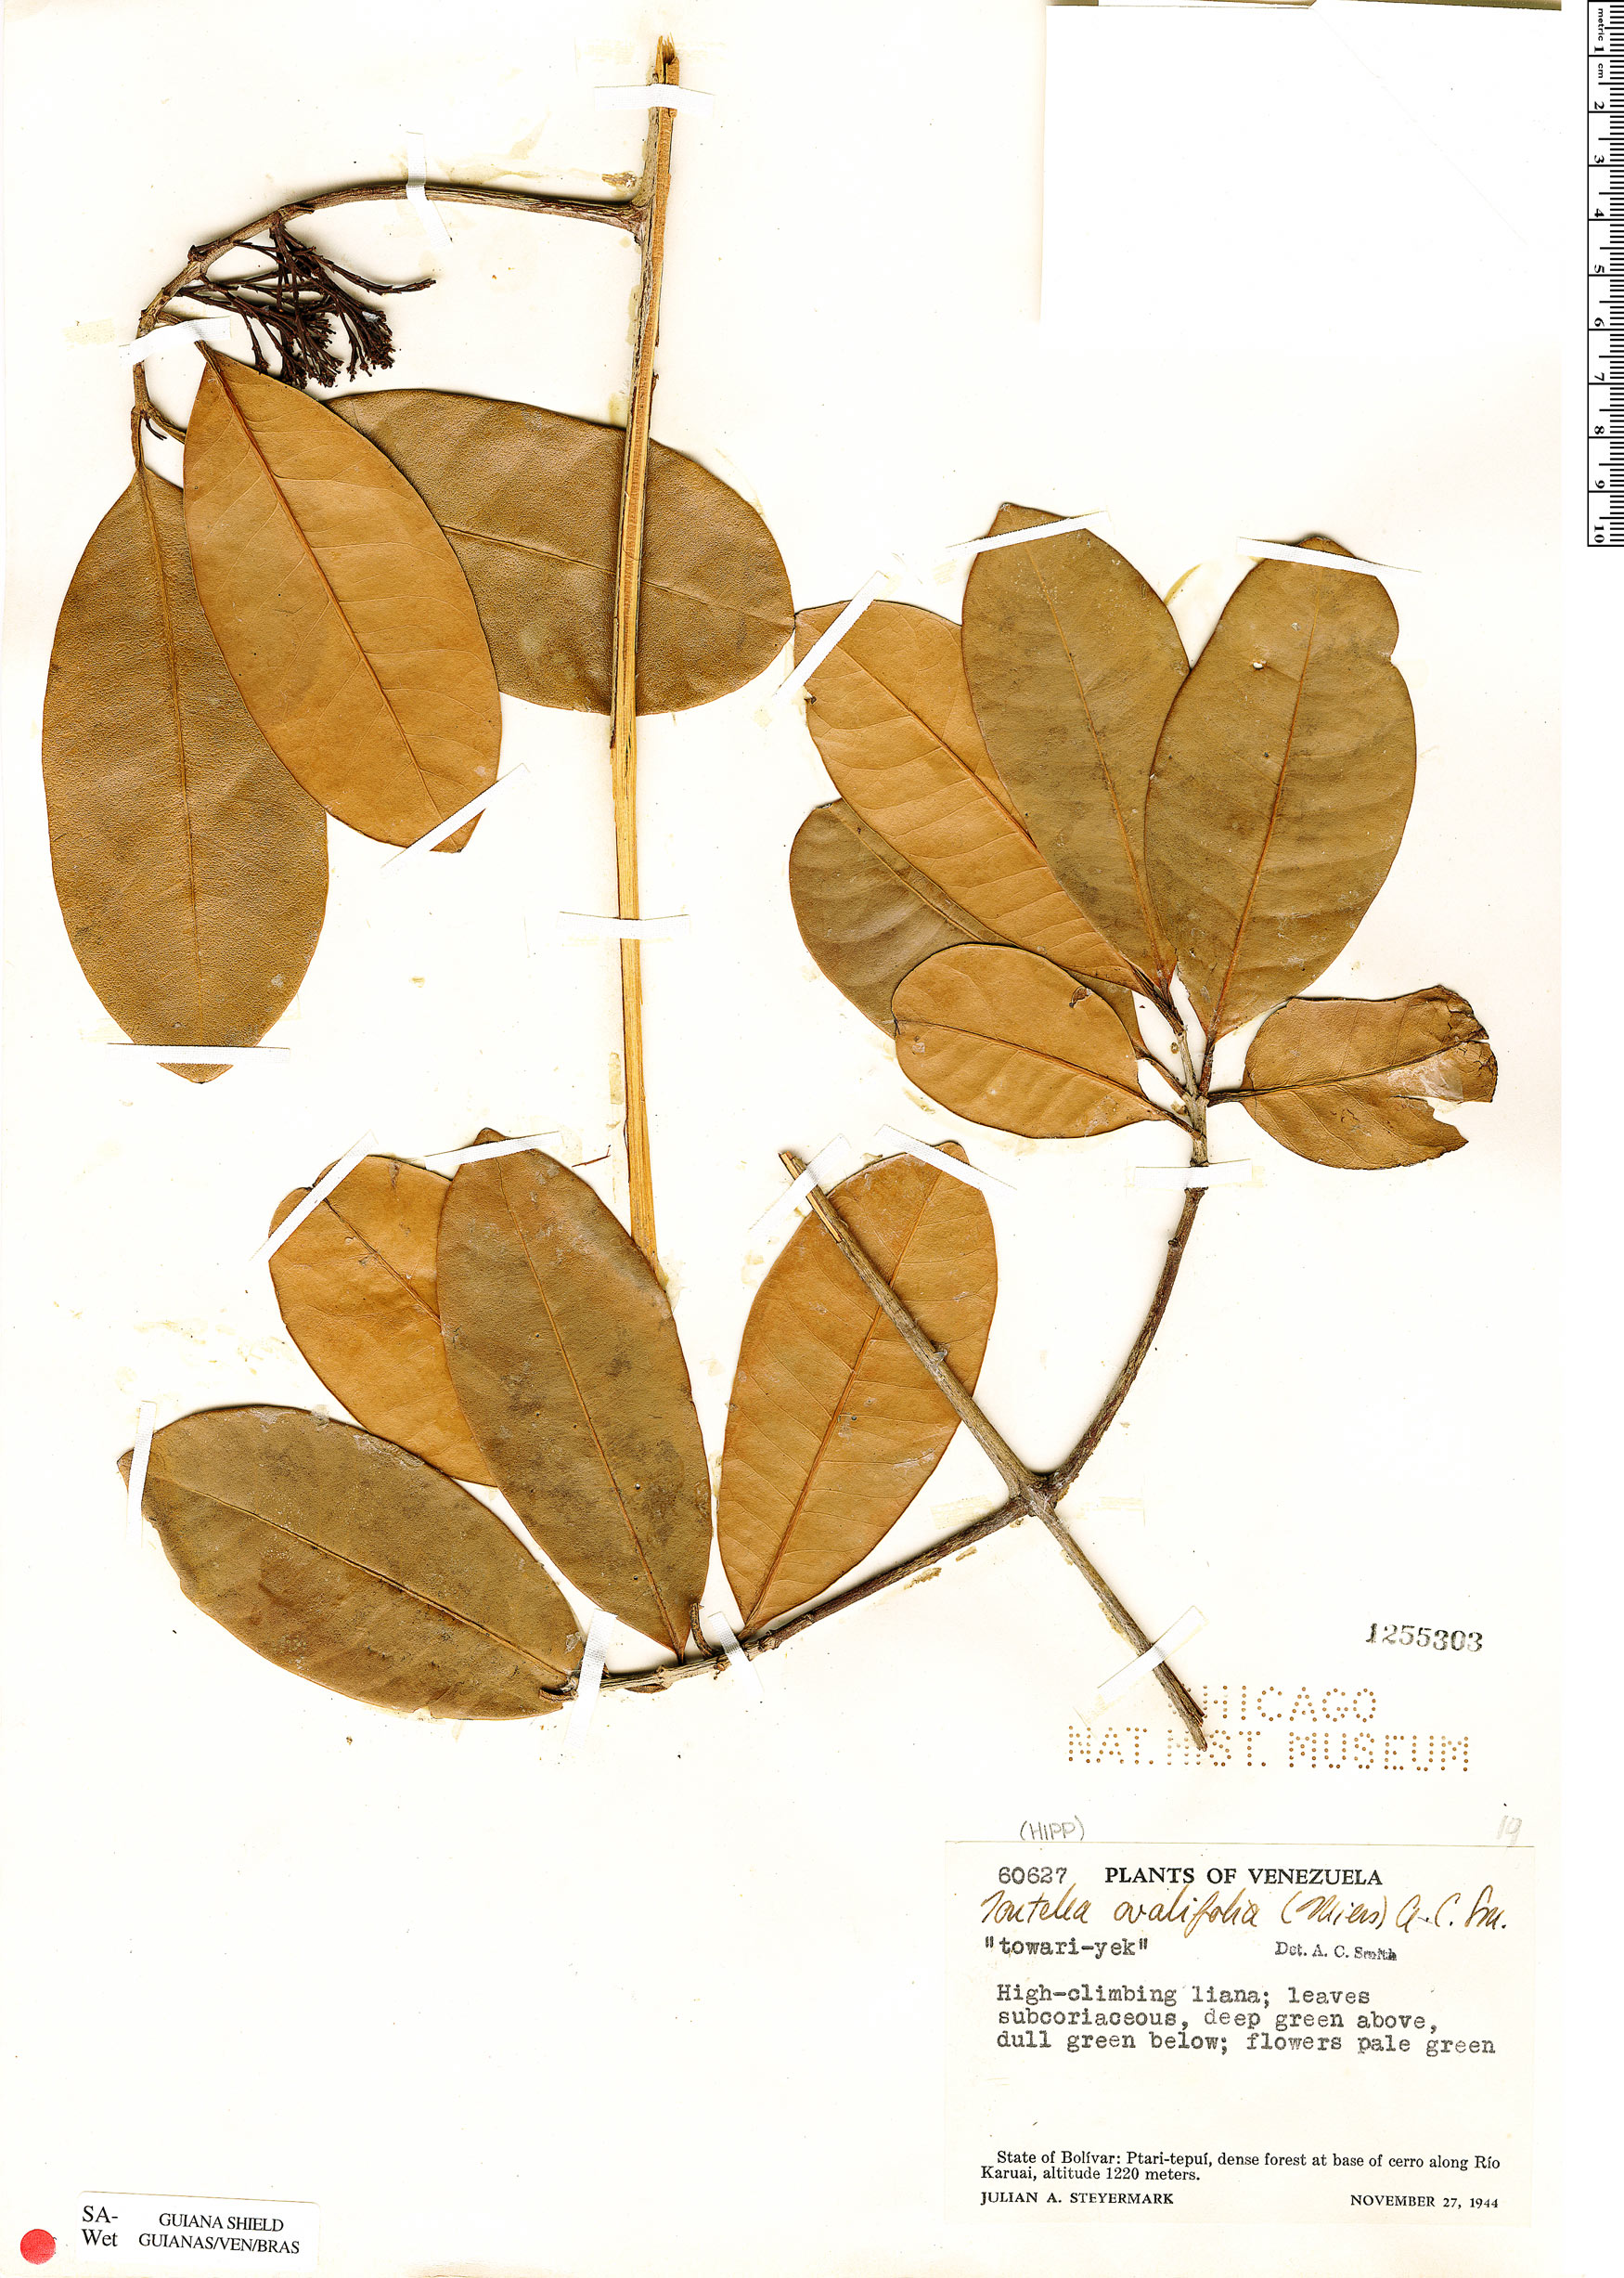 Tontelea passiflora image